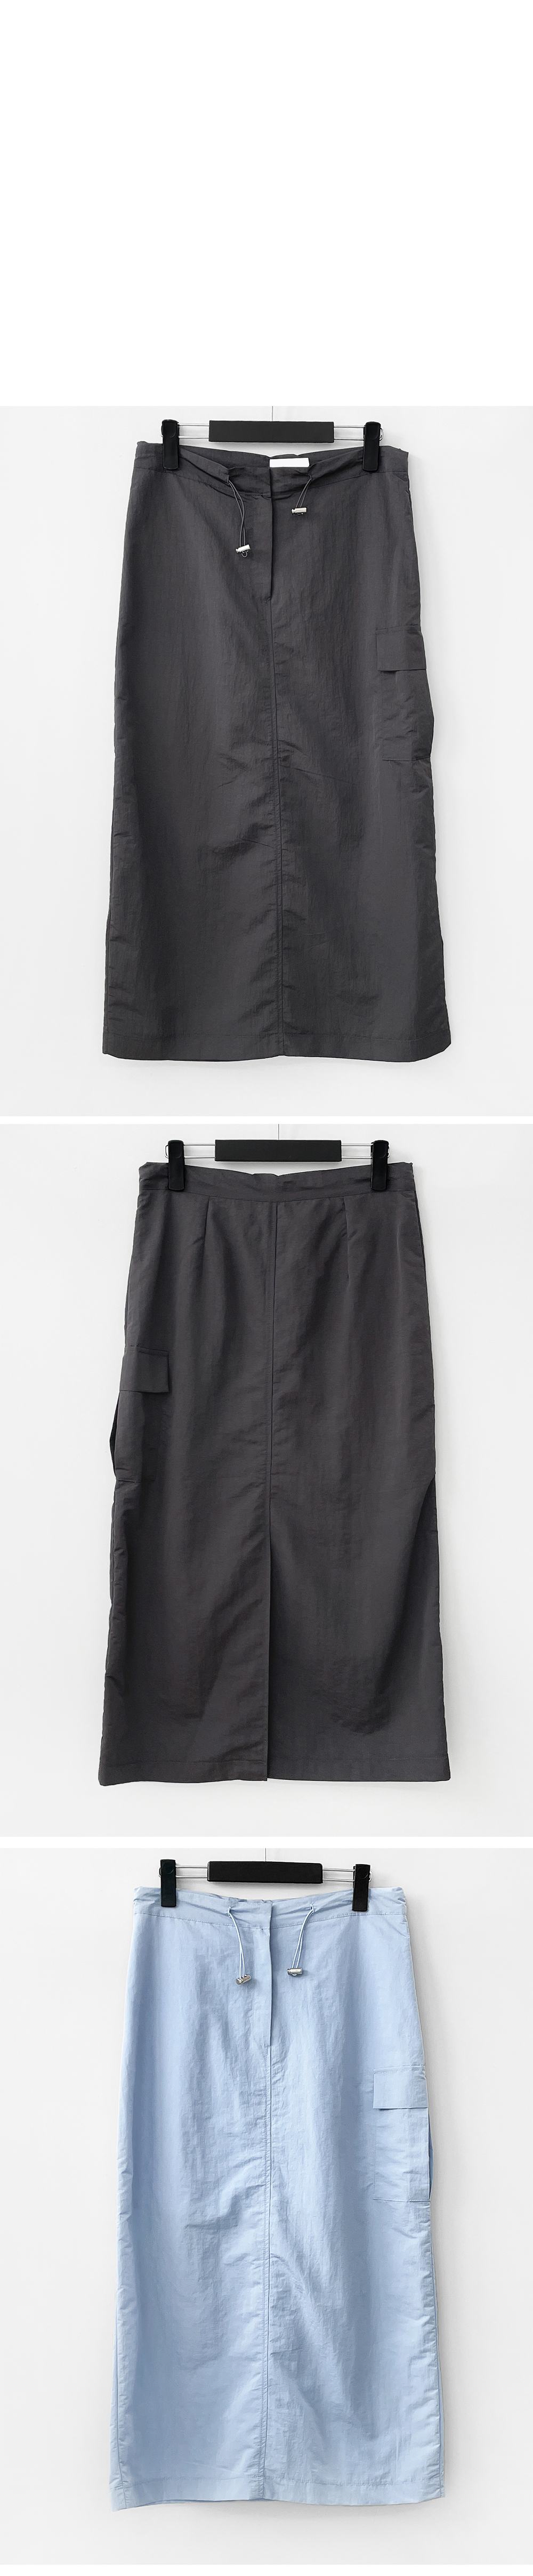 mini skirt model image-S1L11